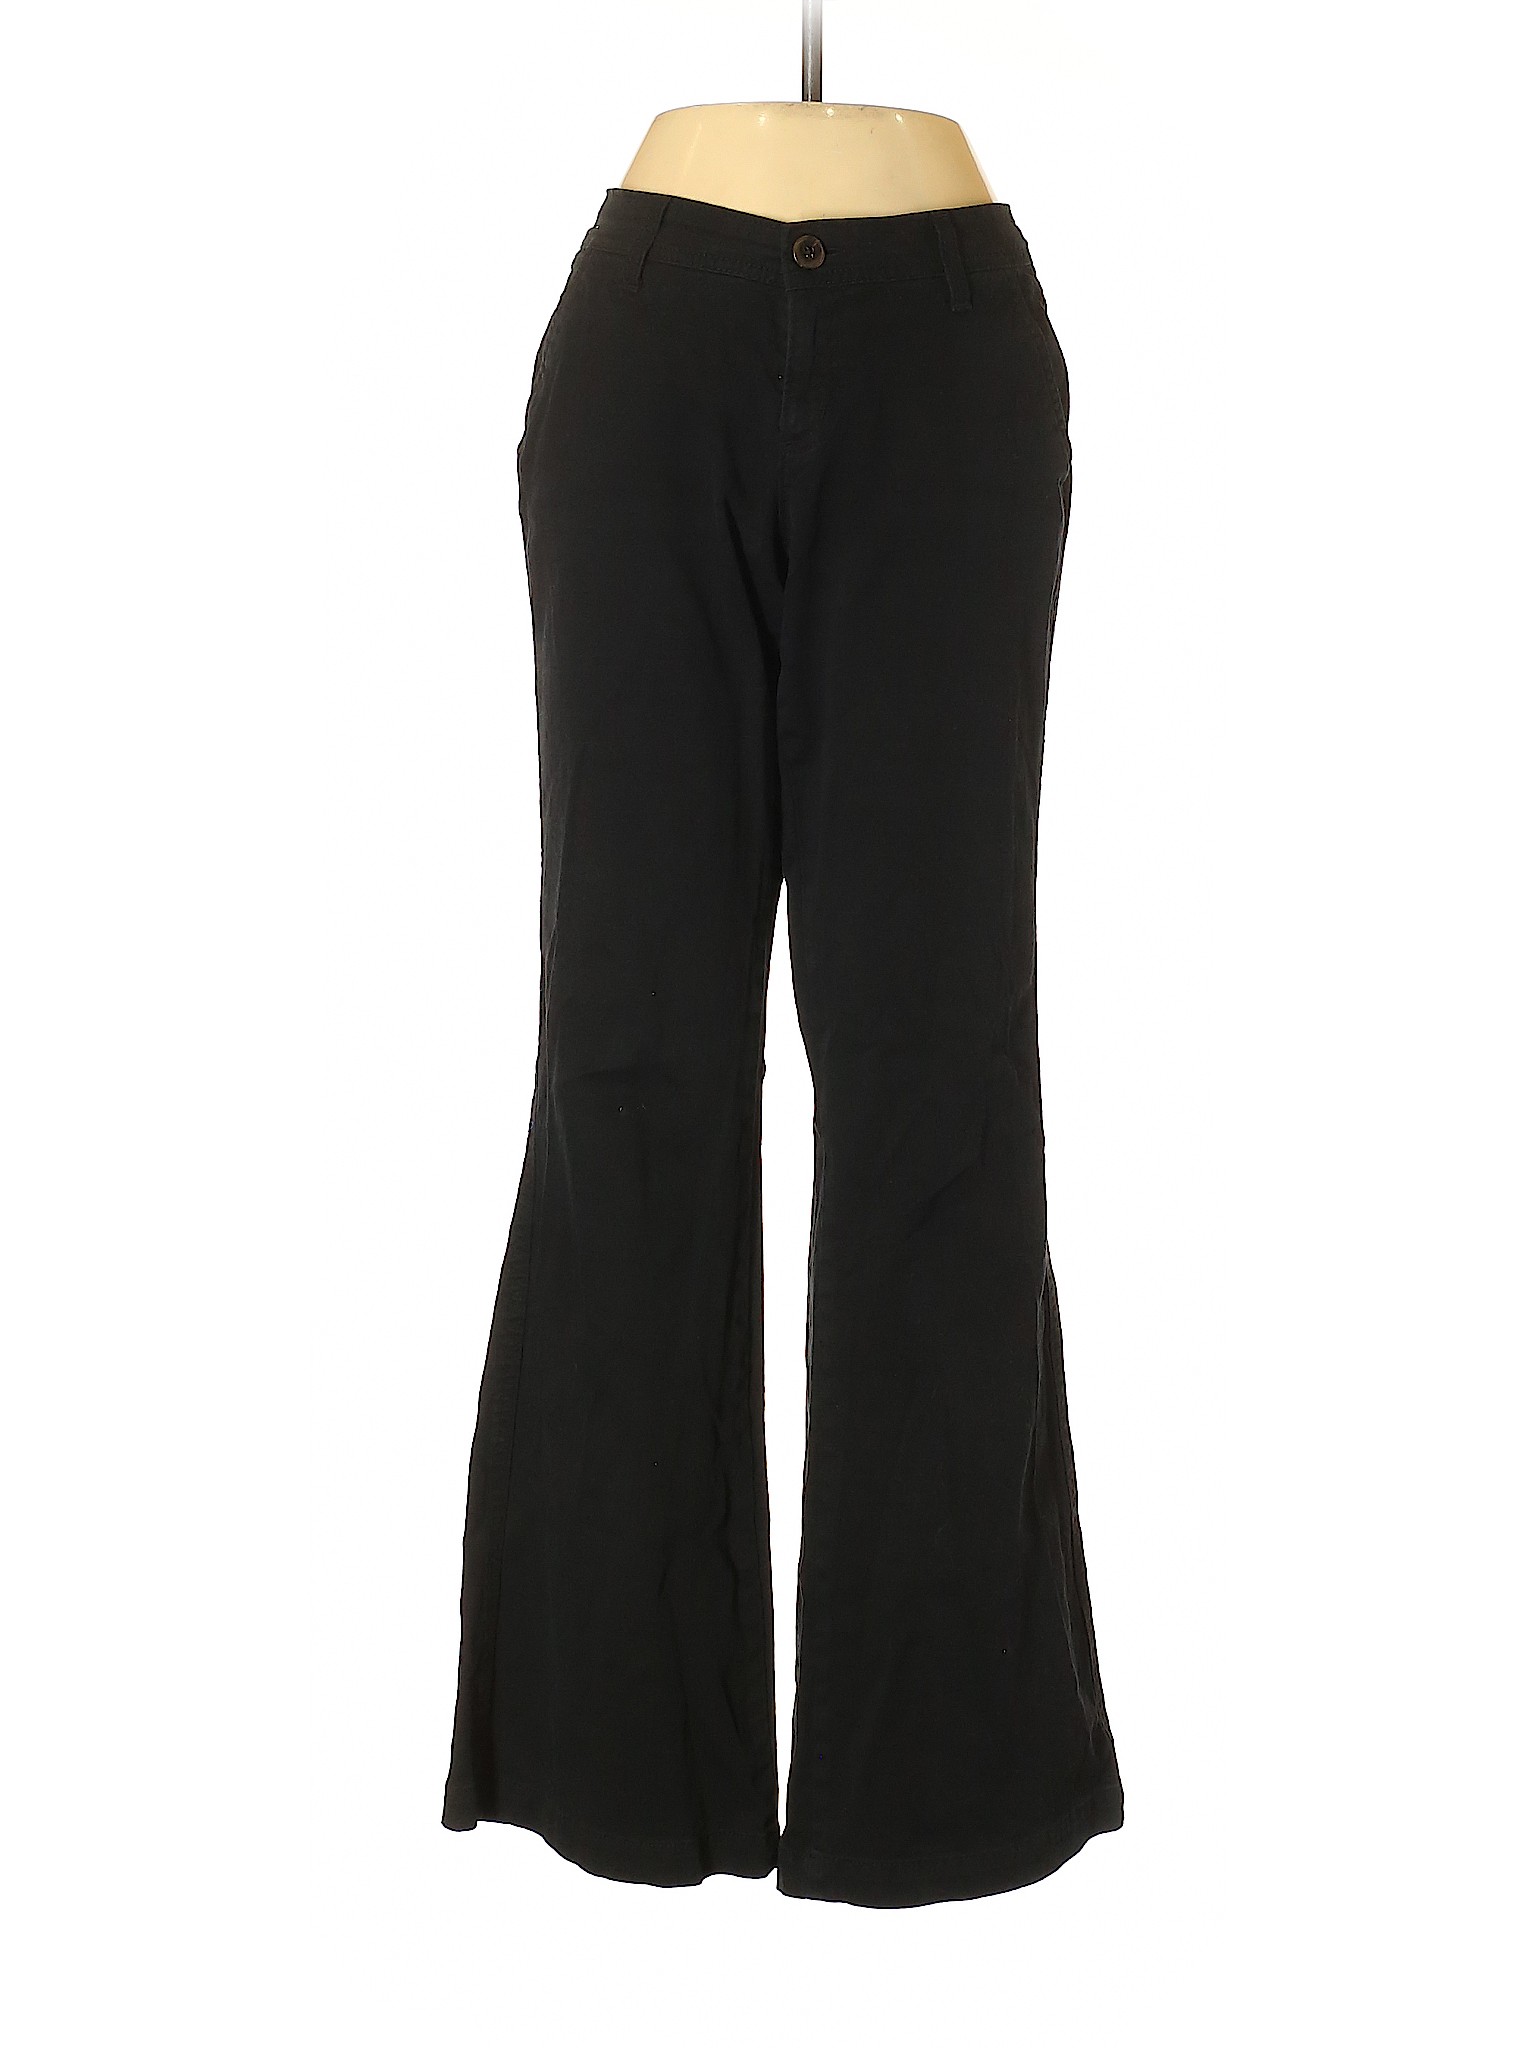 Old Navy Women Black Casual Pants 2 | eBay